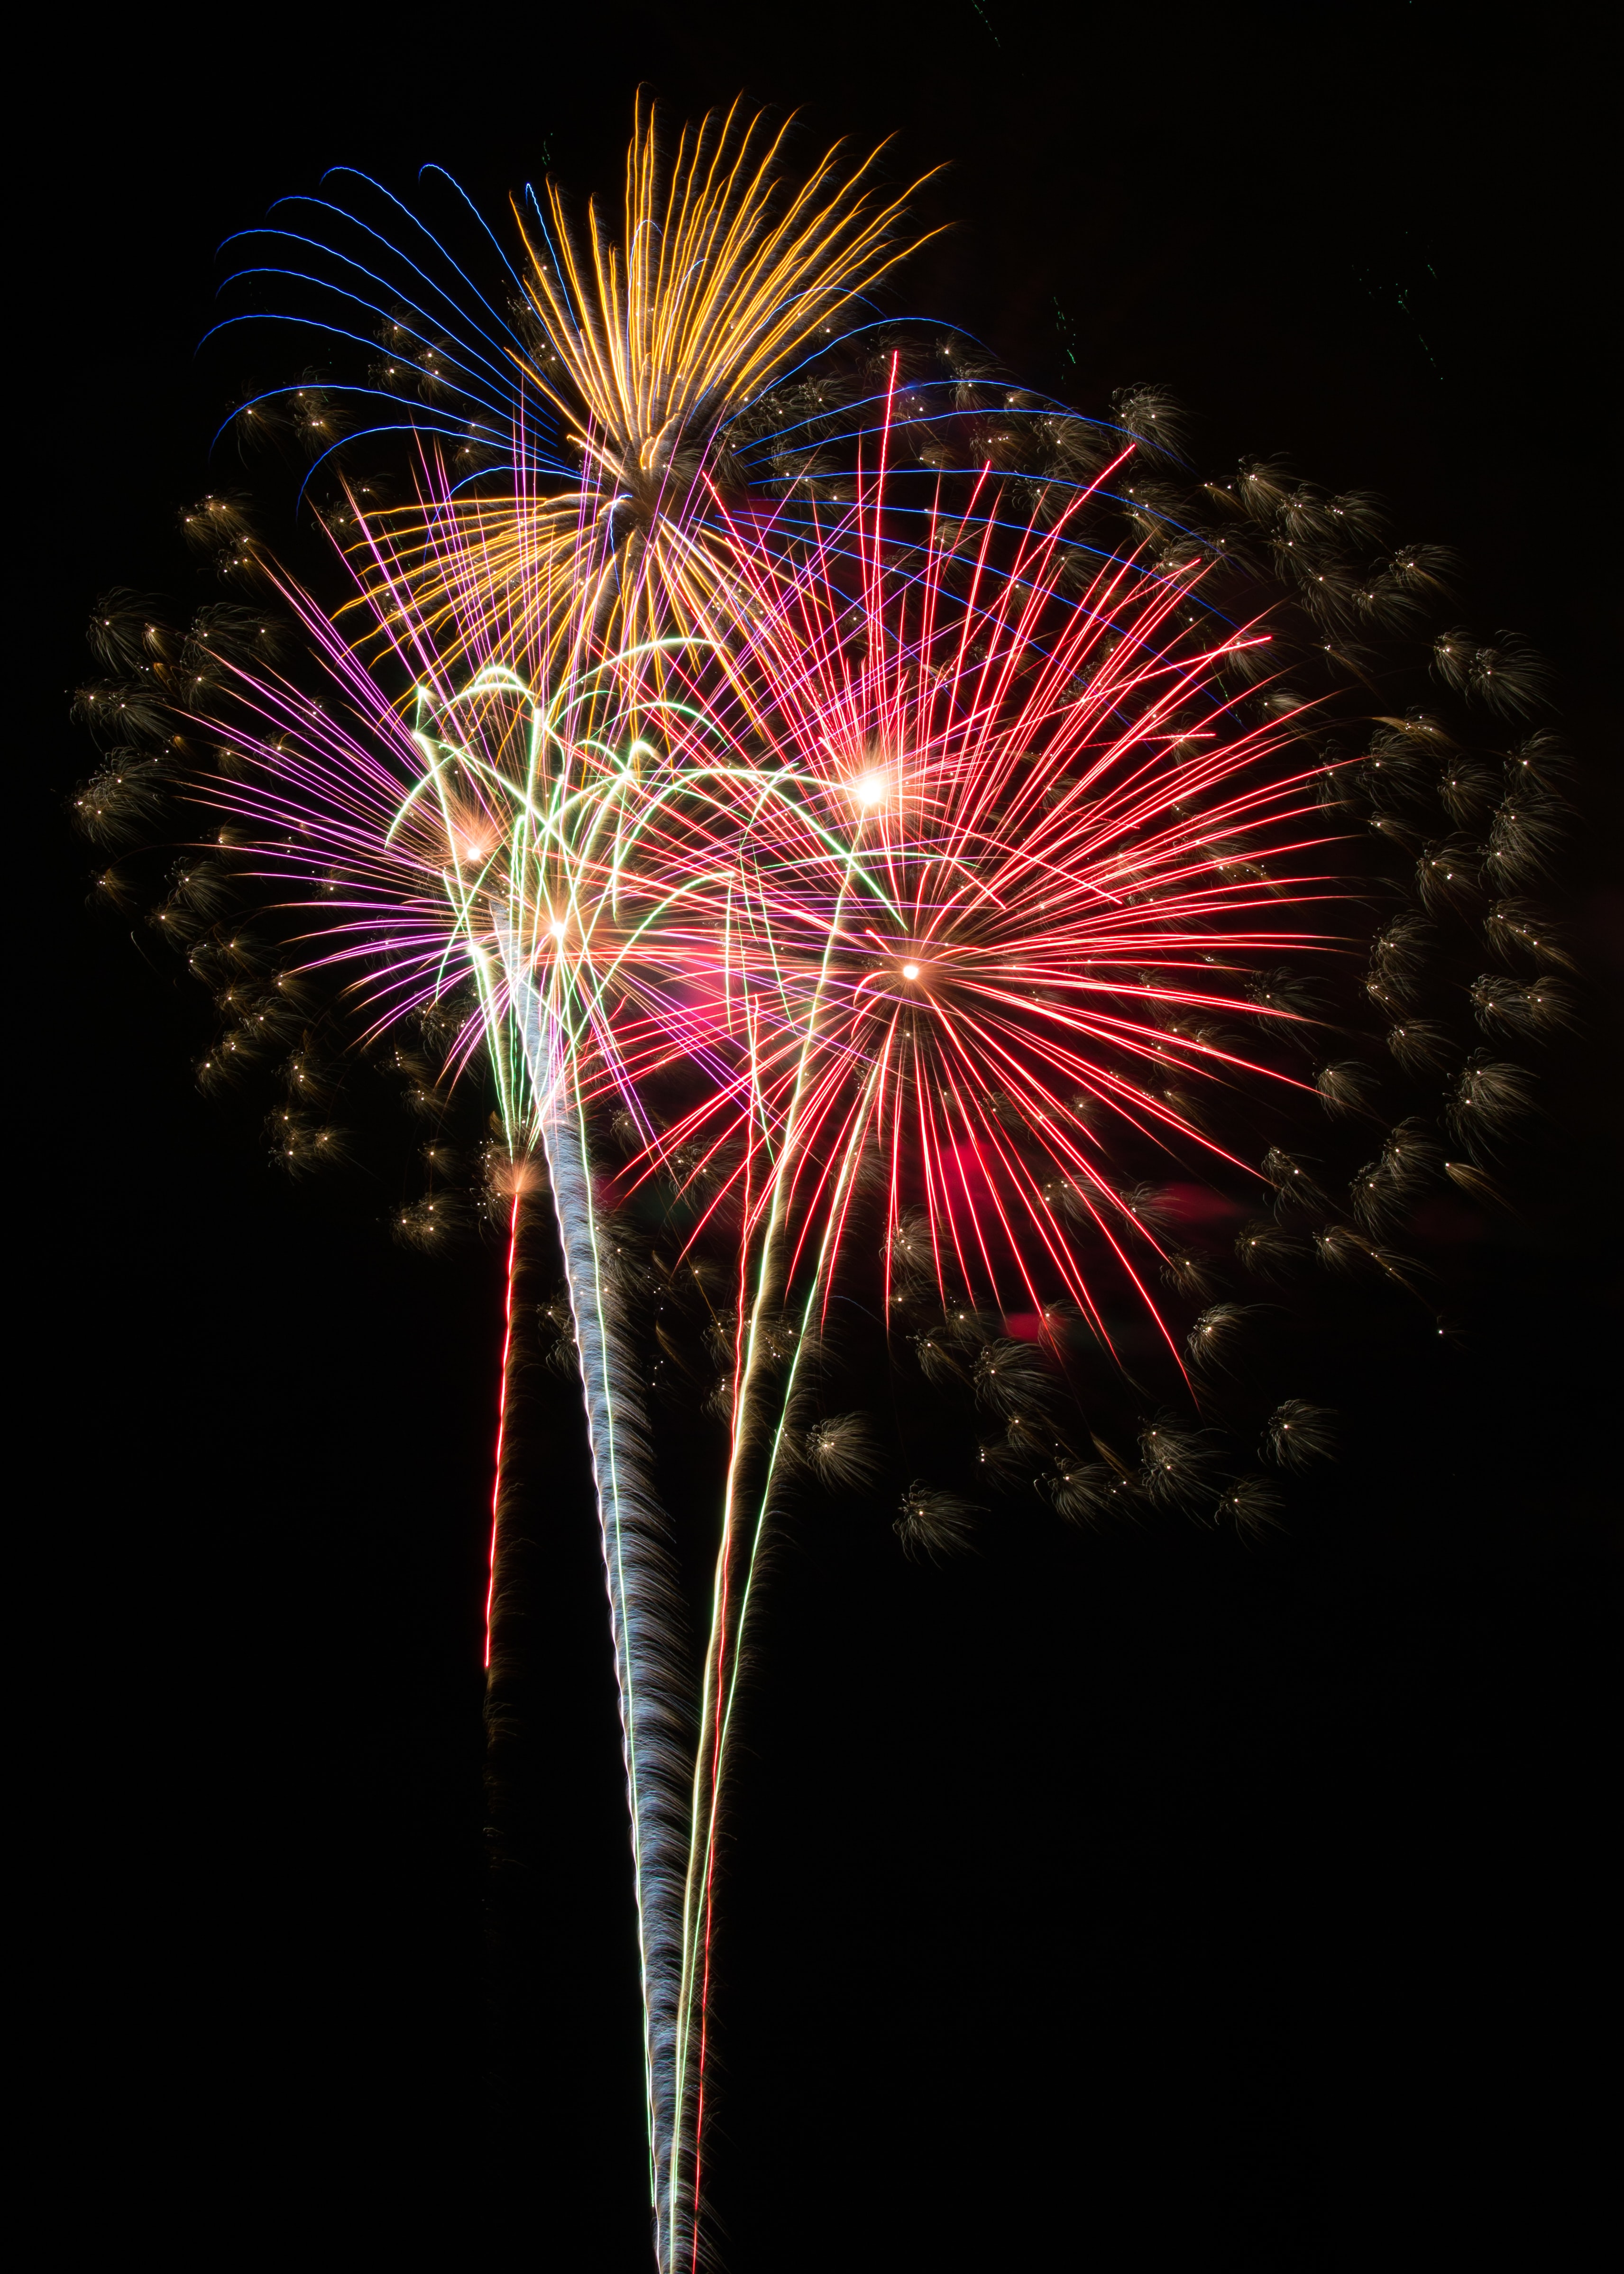 Popular Fireworks Image for Phone